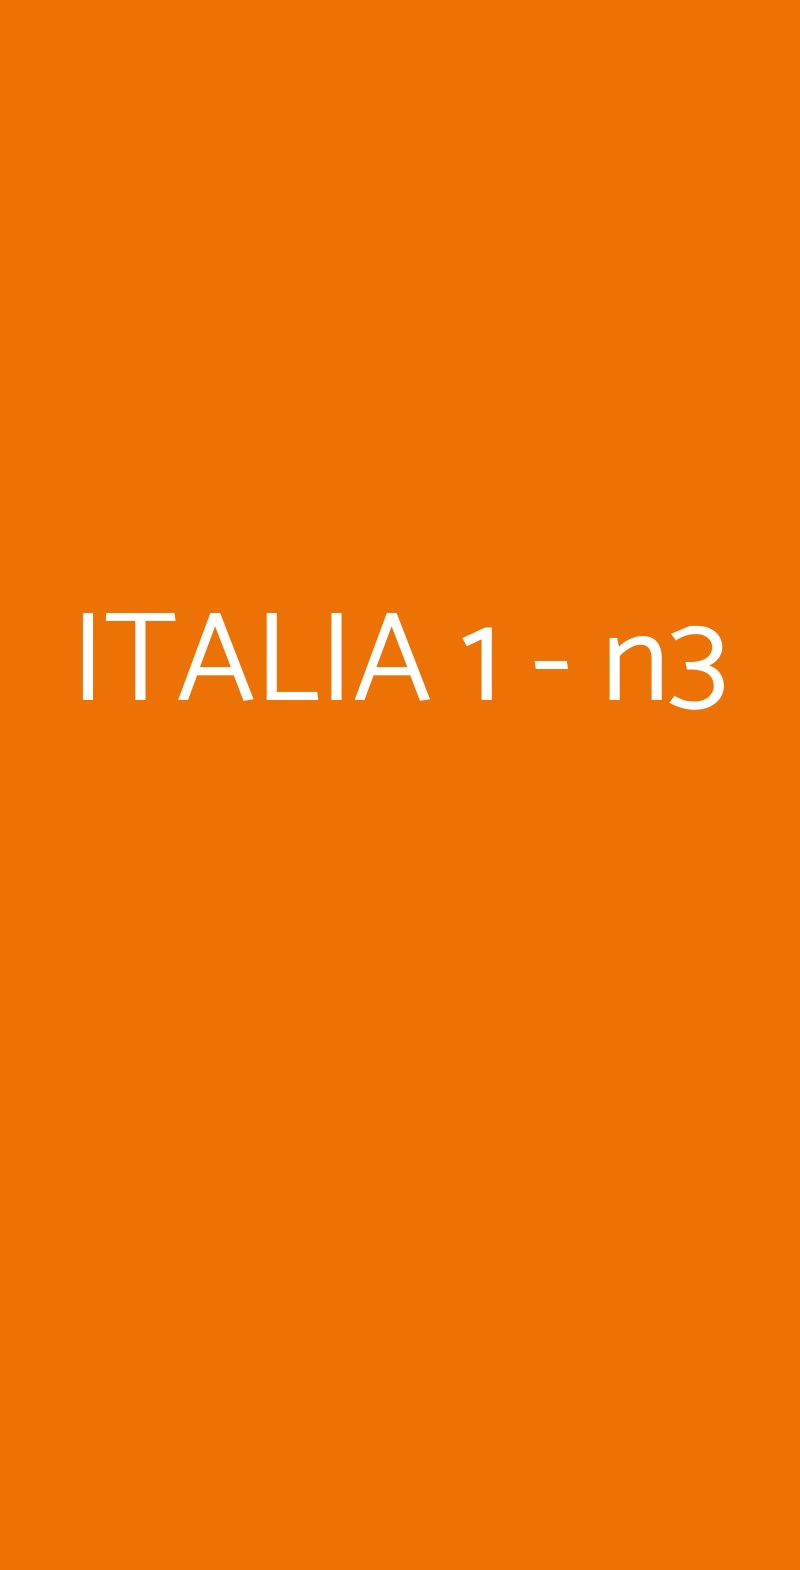 ITALIA 1 - n3 Milano menù 1 pagina